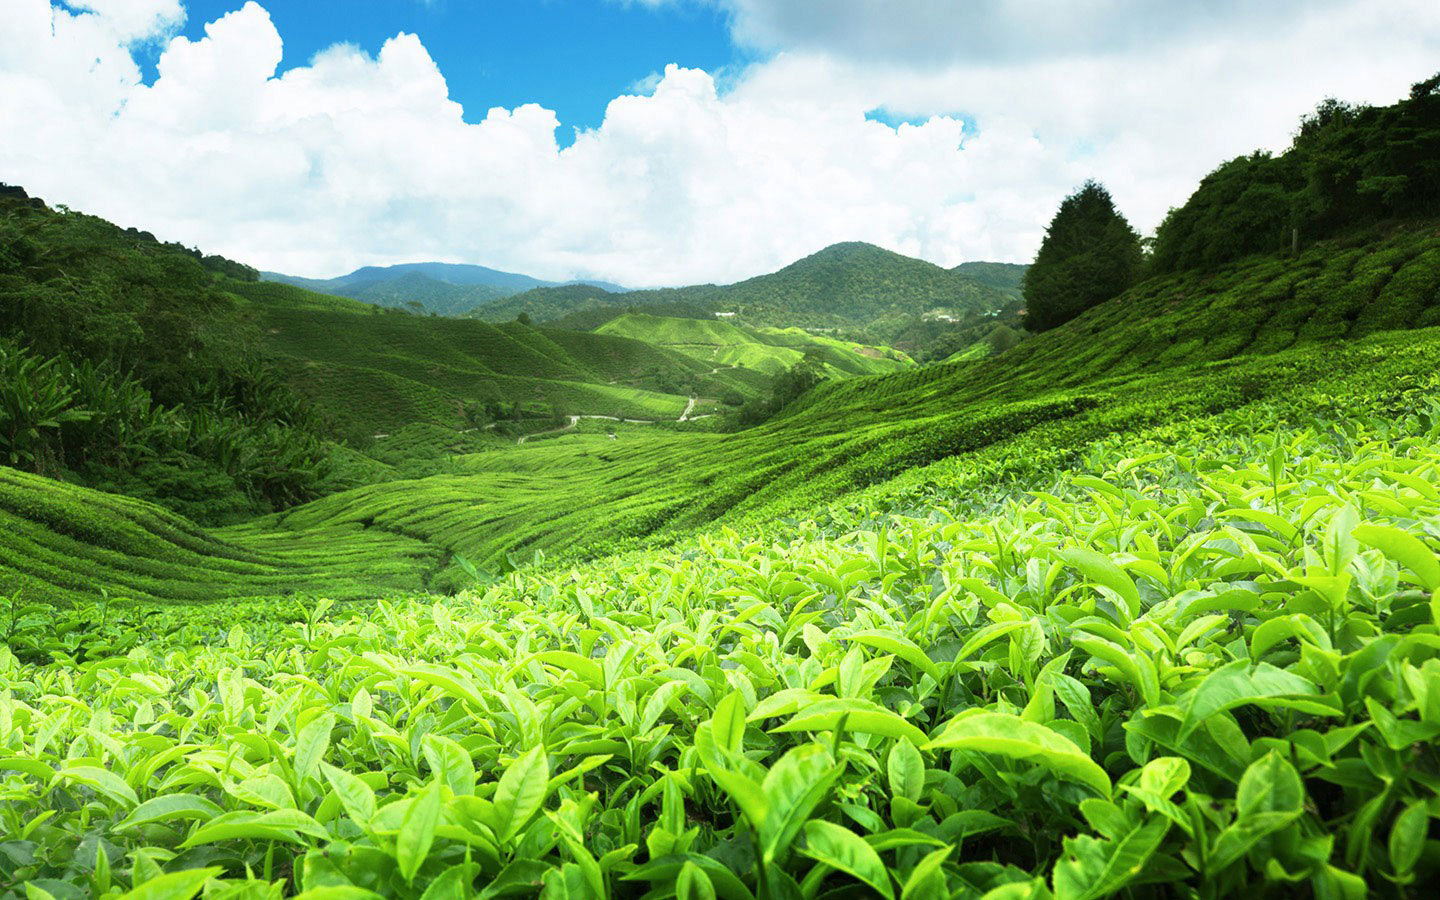 Tea plantation in Sri Lanka. Beautiful landscape